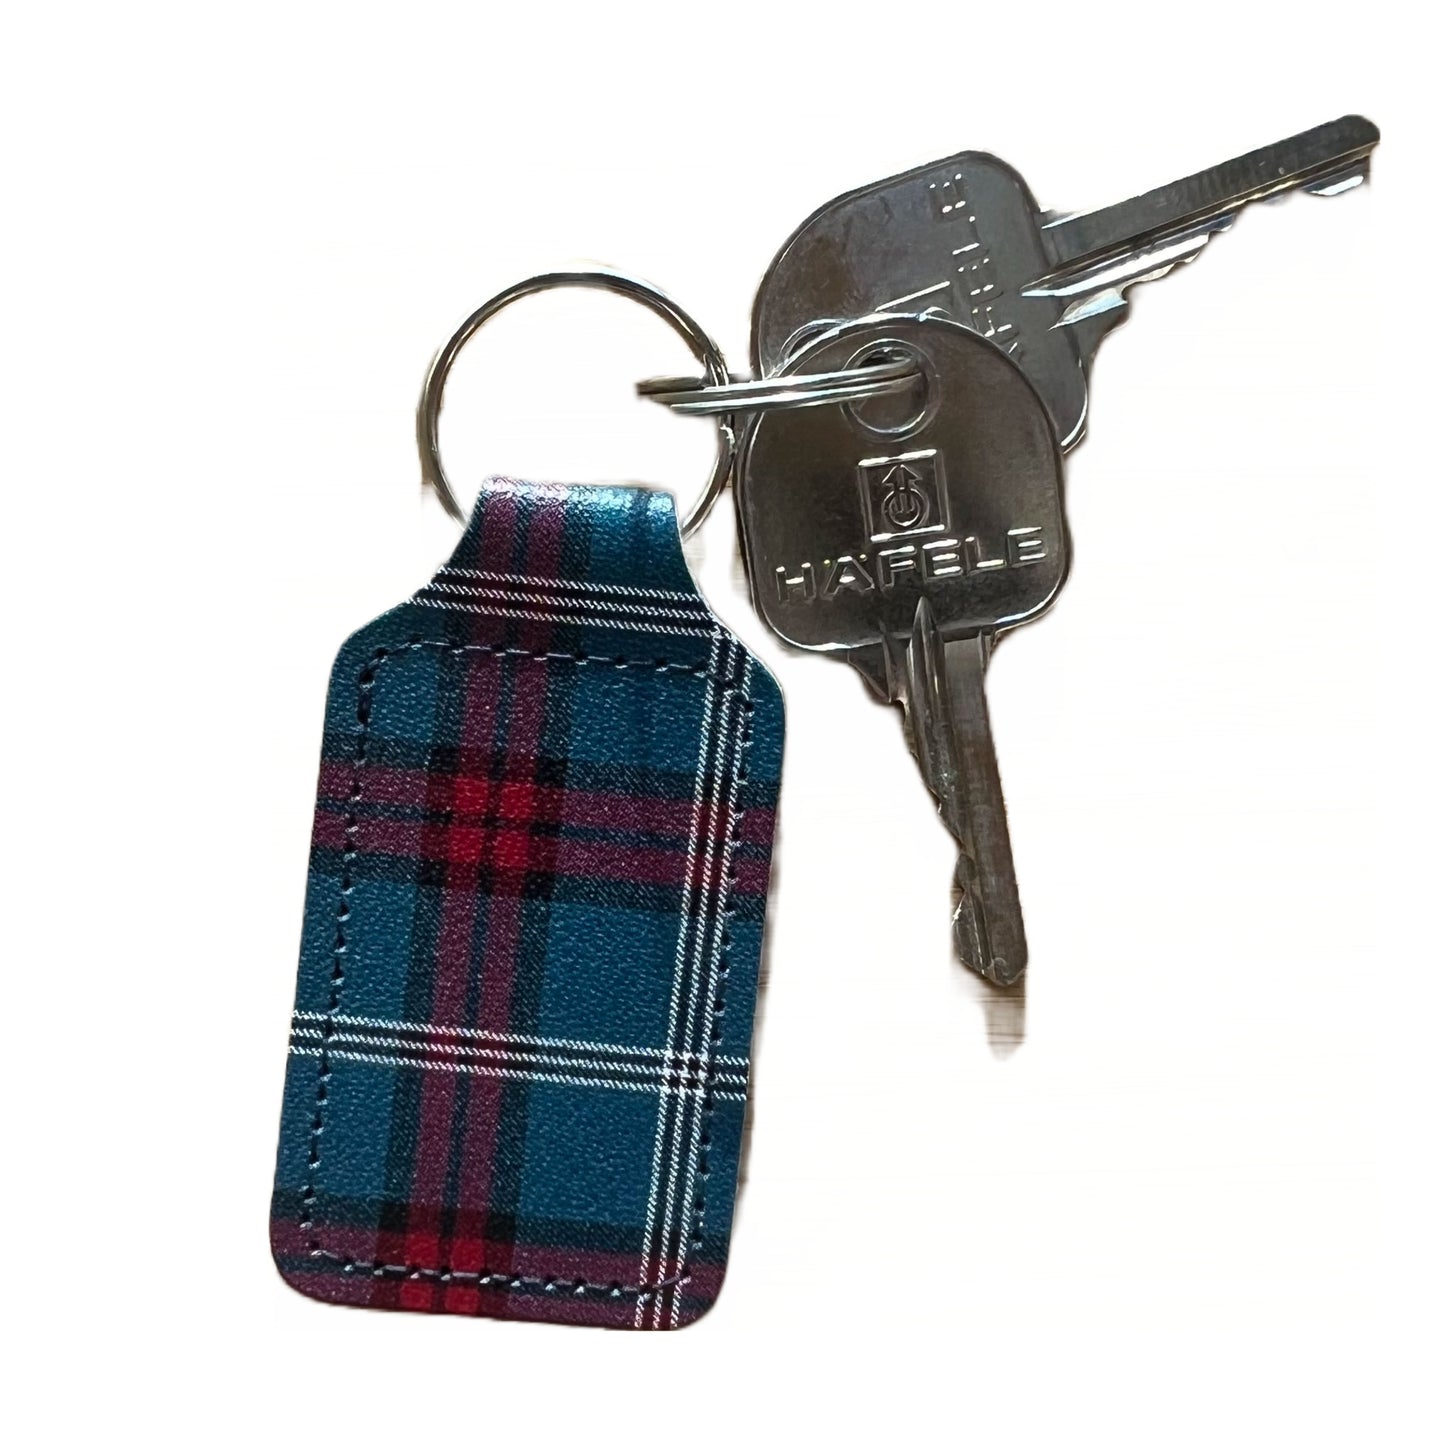 Set of keys on a key ring with a tartan design